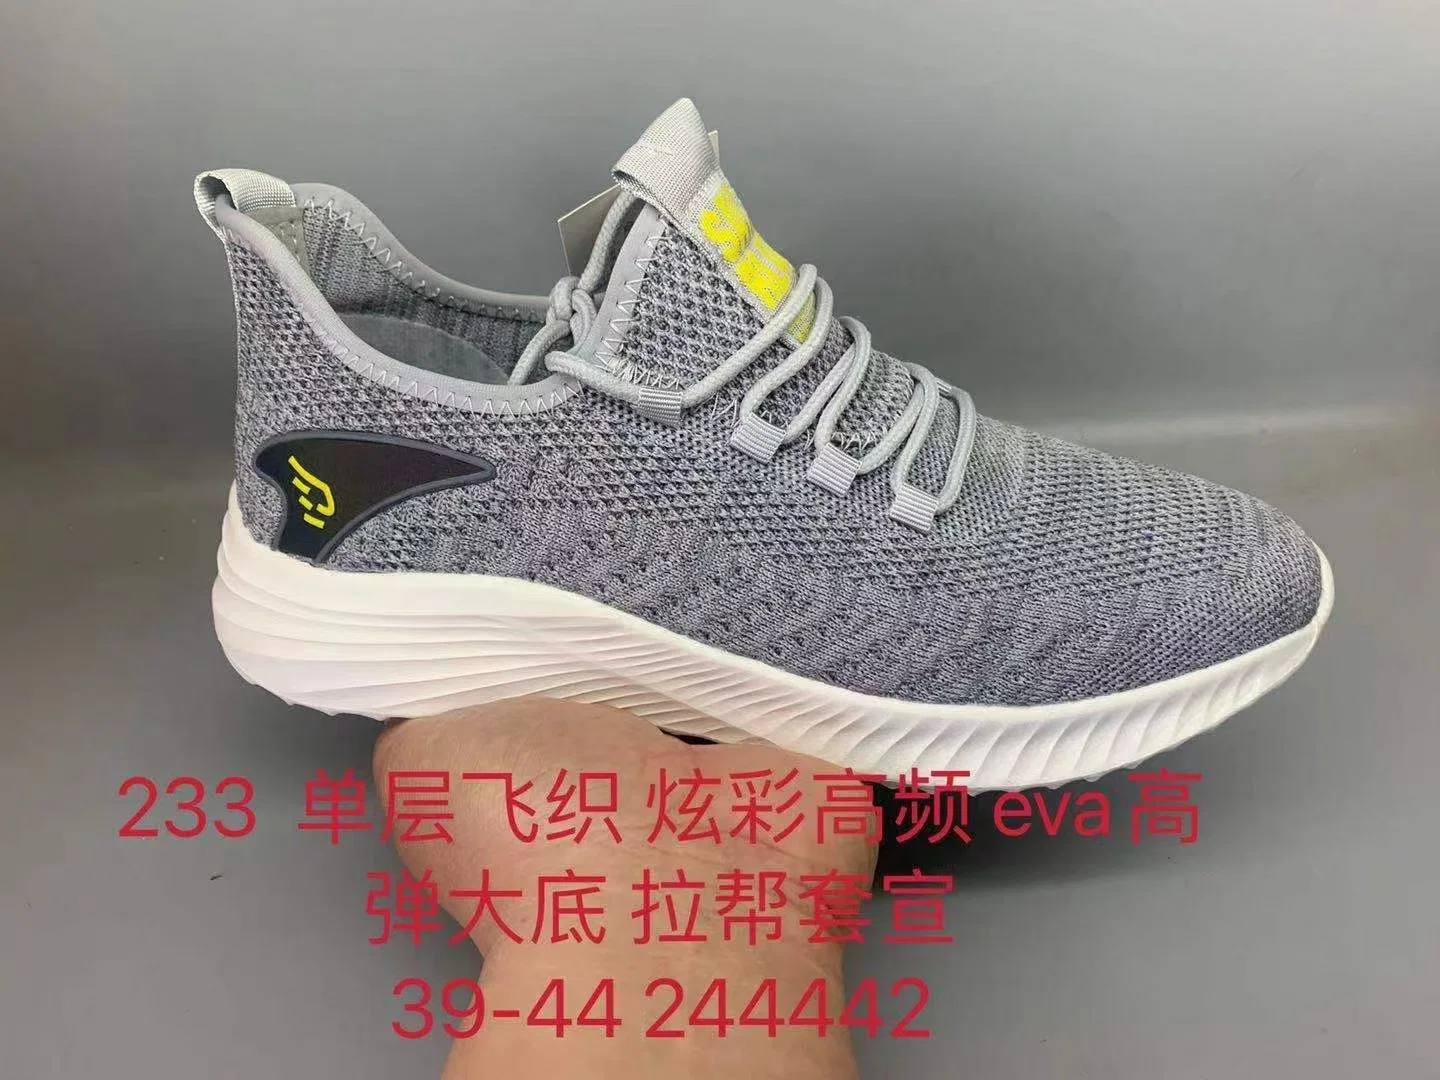 China Alimentación Fábrica de zapatos con precio competitivo calzado zapatillas